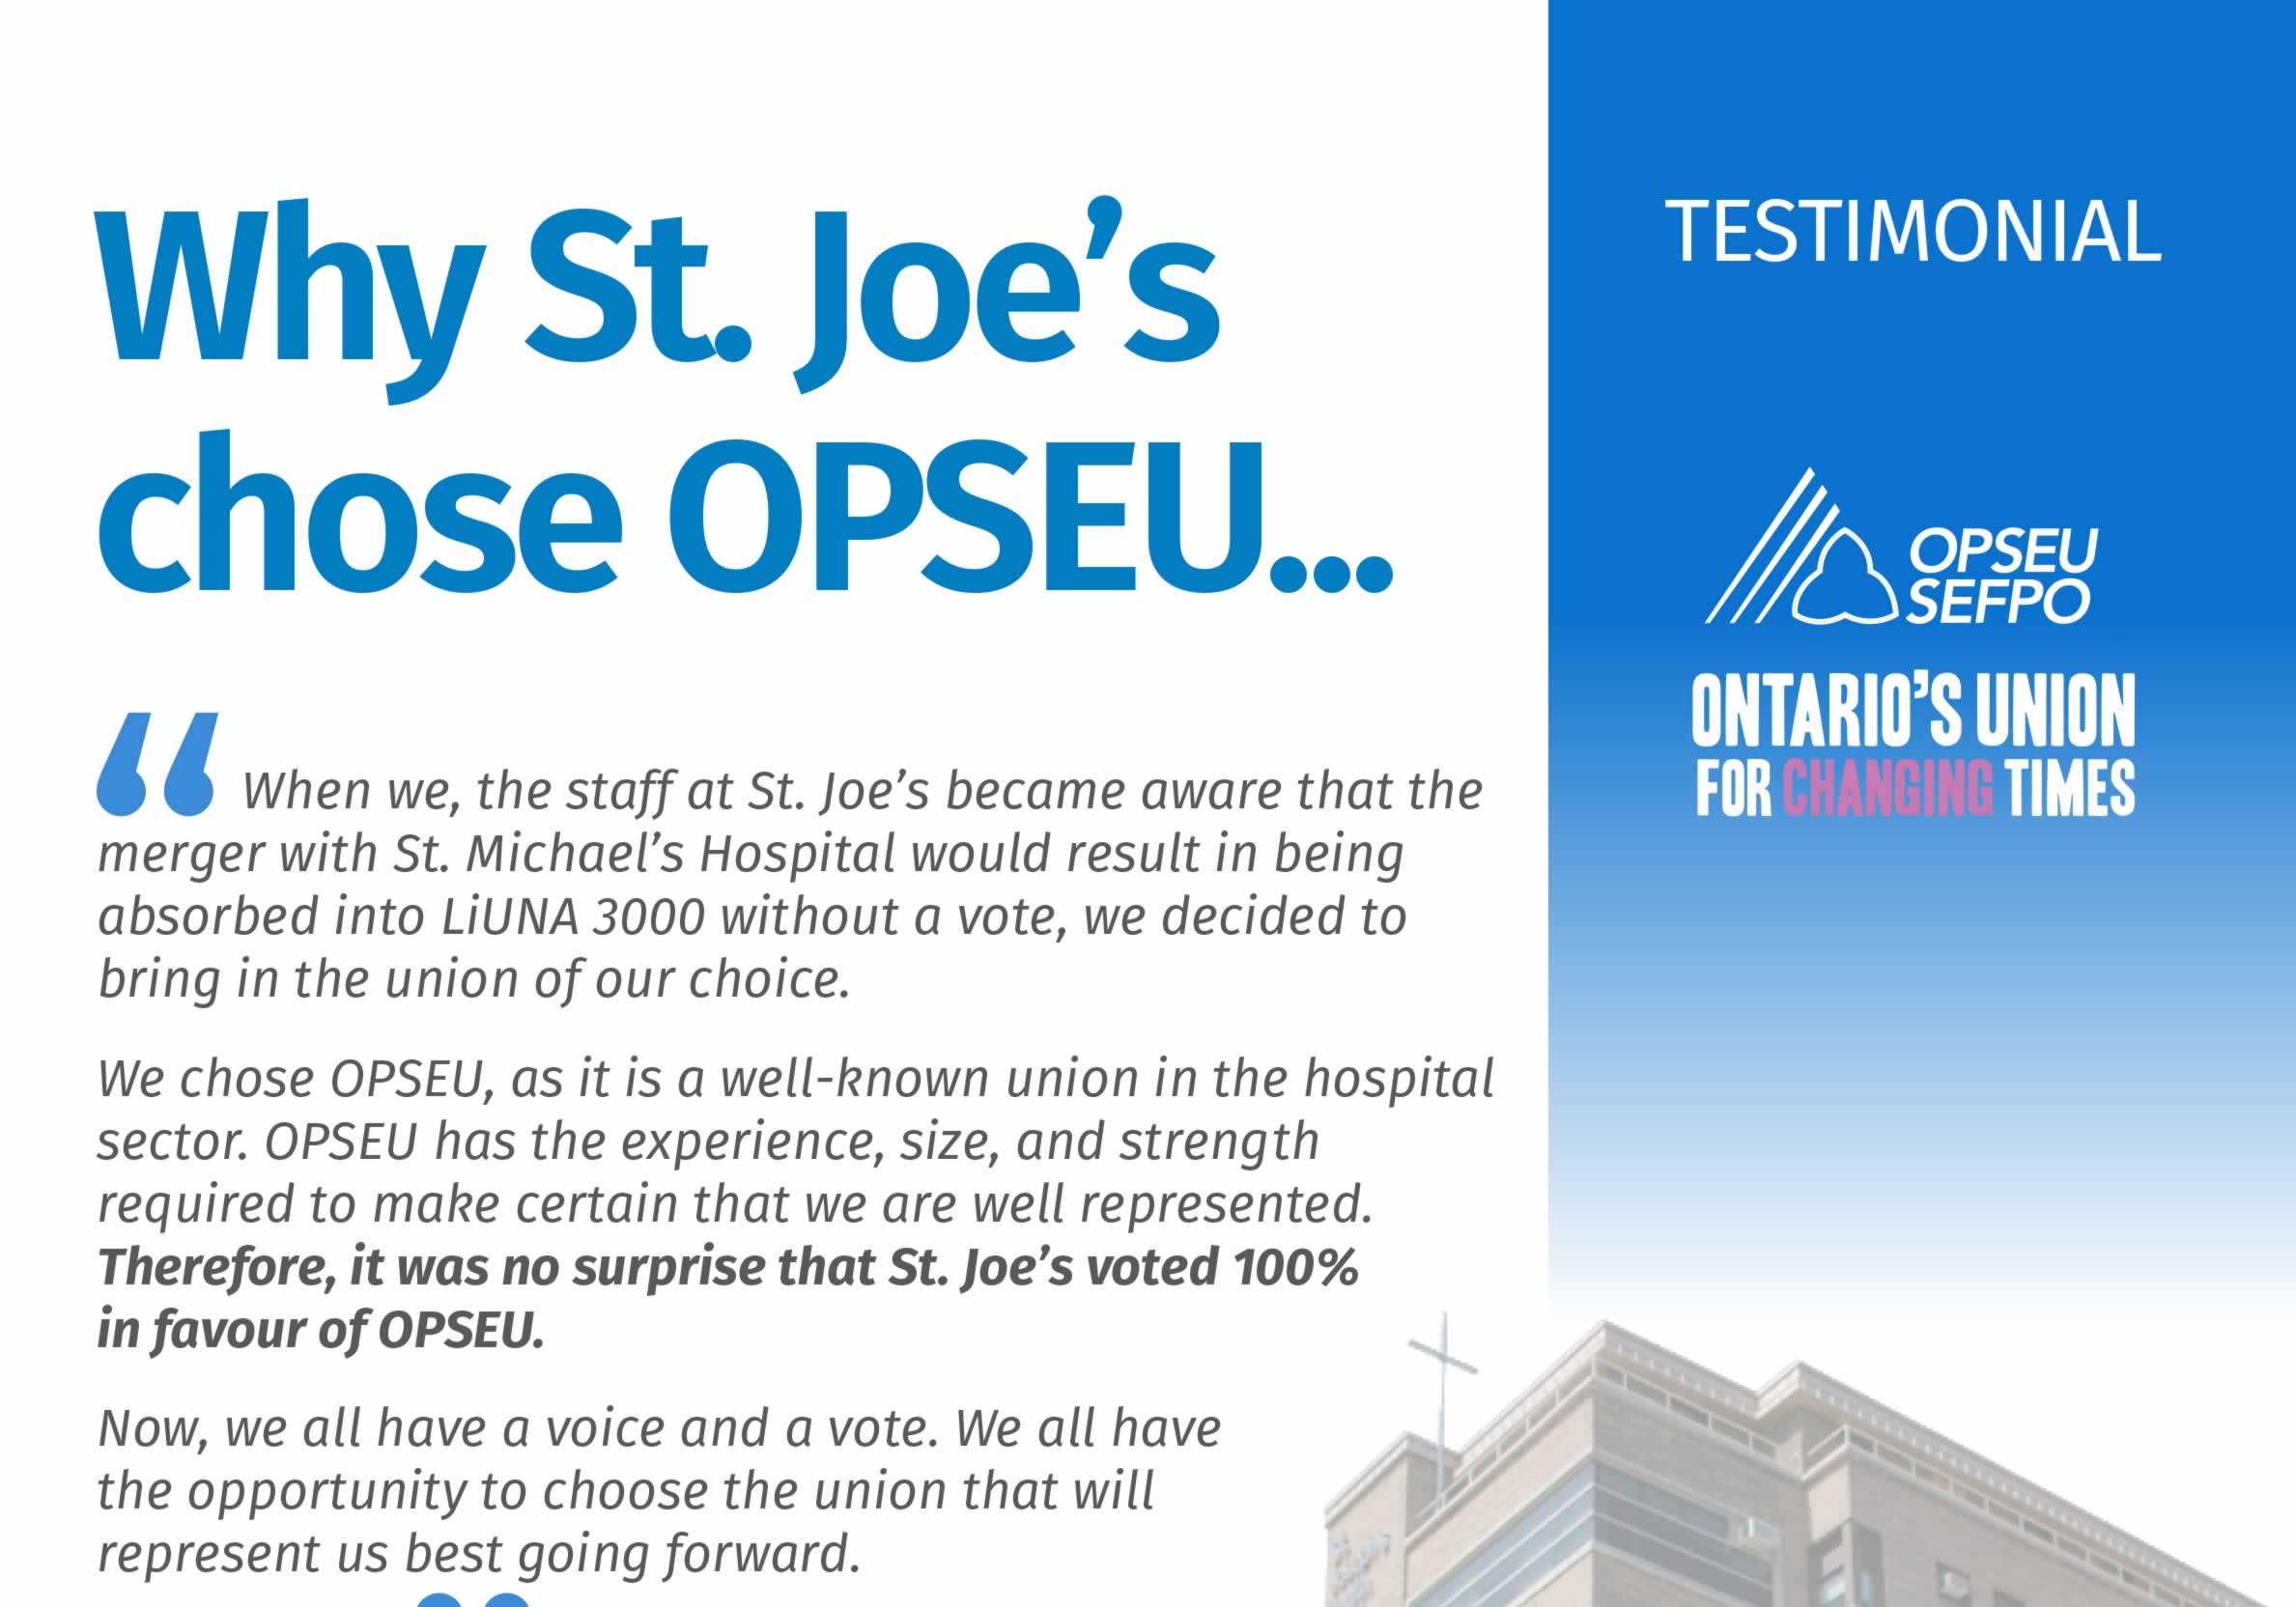 Why St. Joe's chose OPSEU testimonial